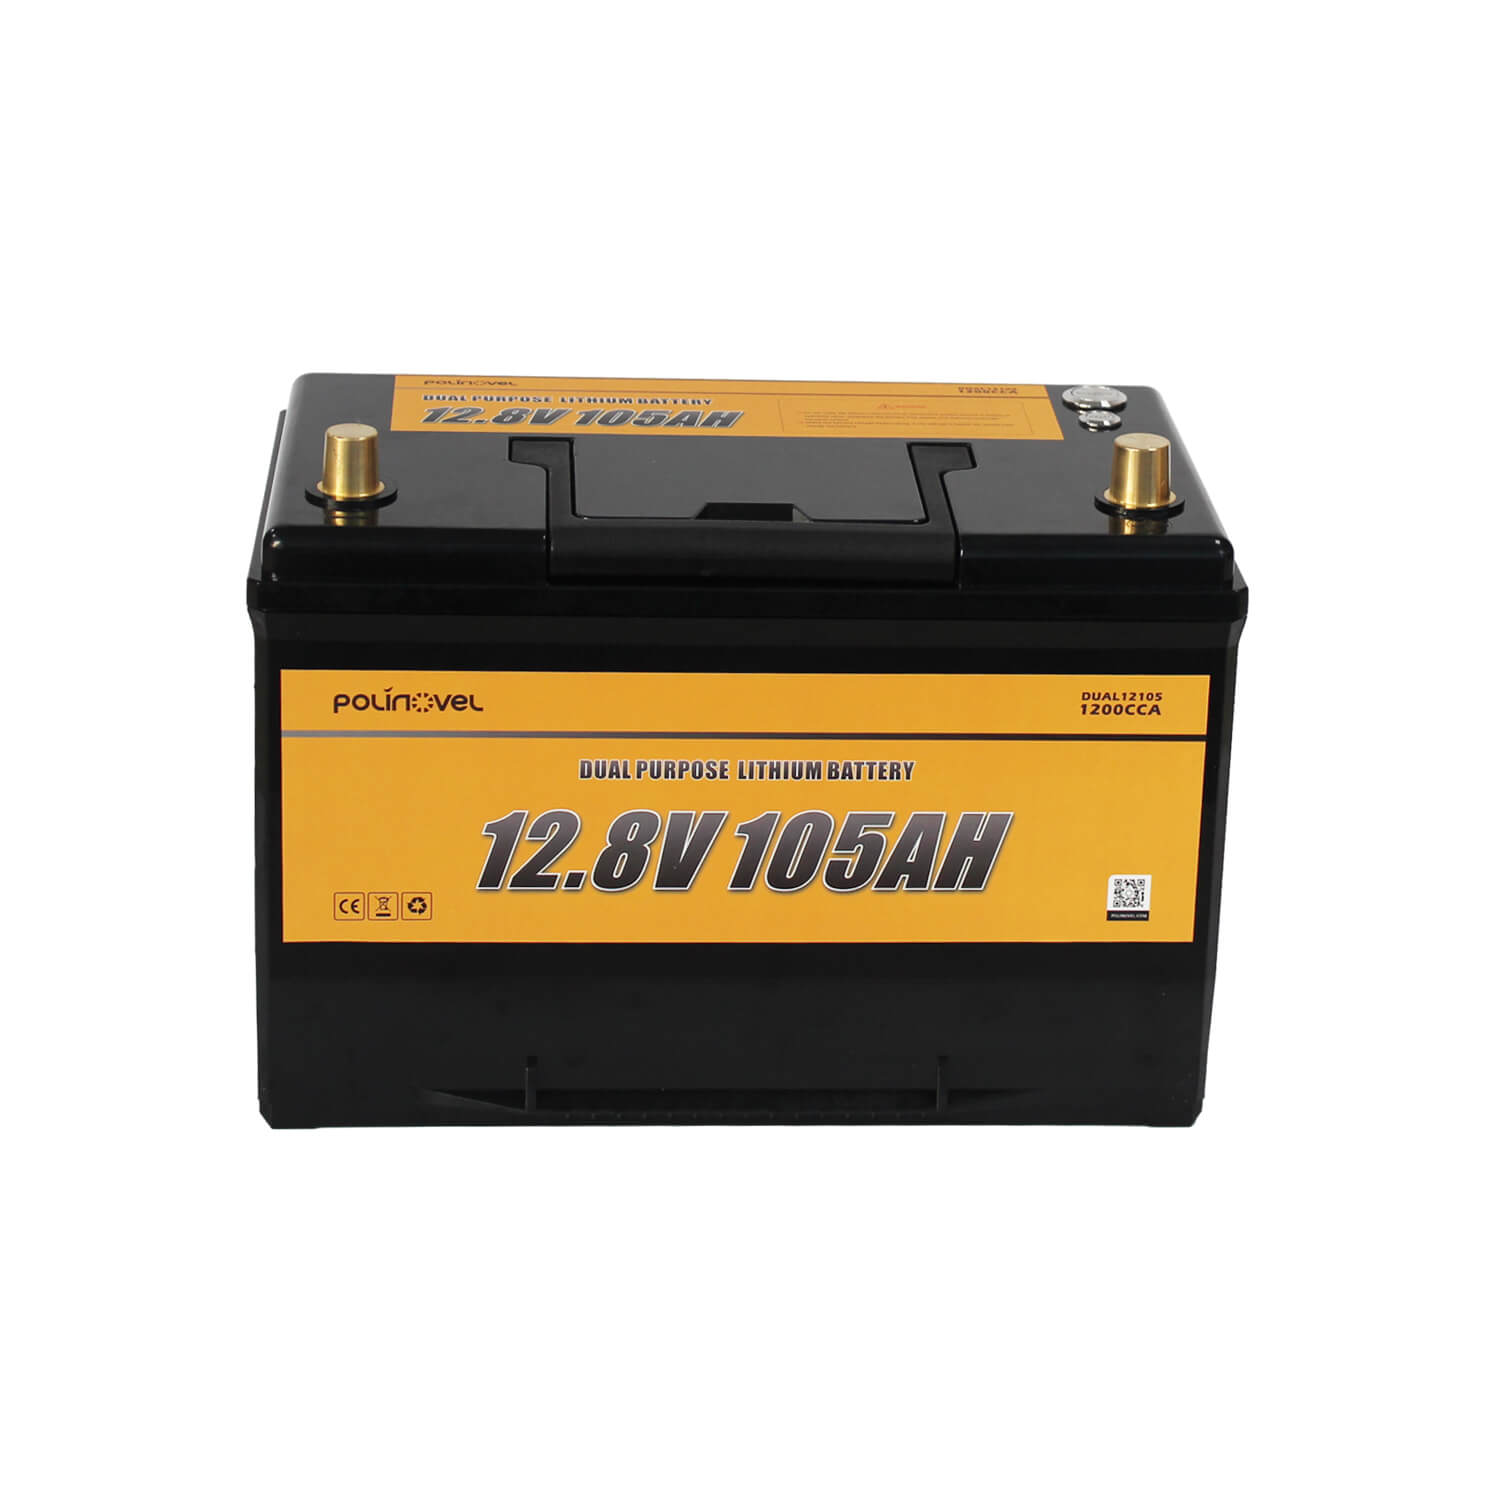 Polinovel 12V 105Ah Dual Purpose Lithium Battery